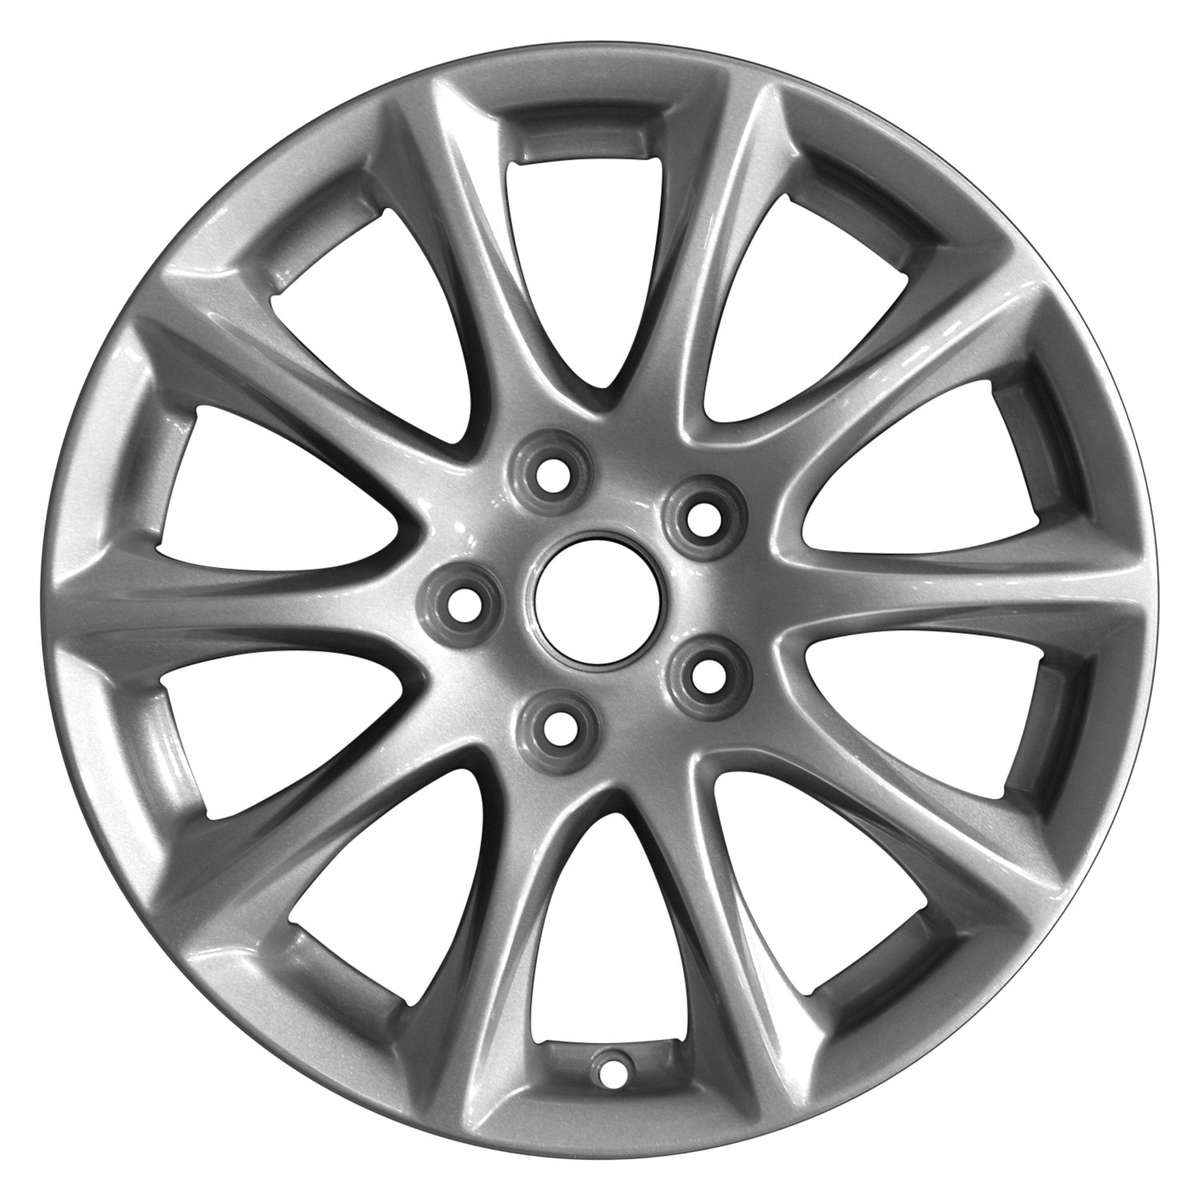 2018 Ford Fusion 16" OEM Wheel Rim W3983S